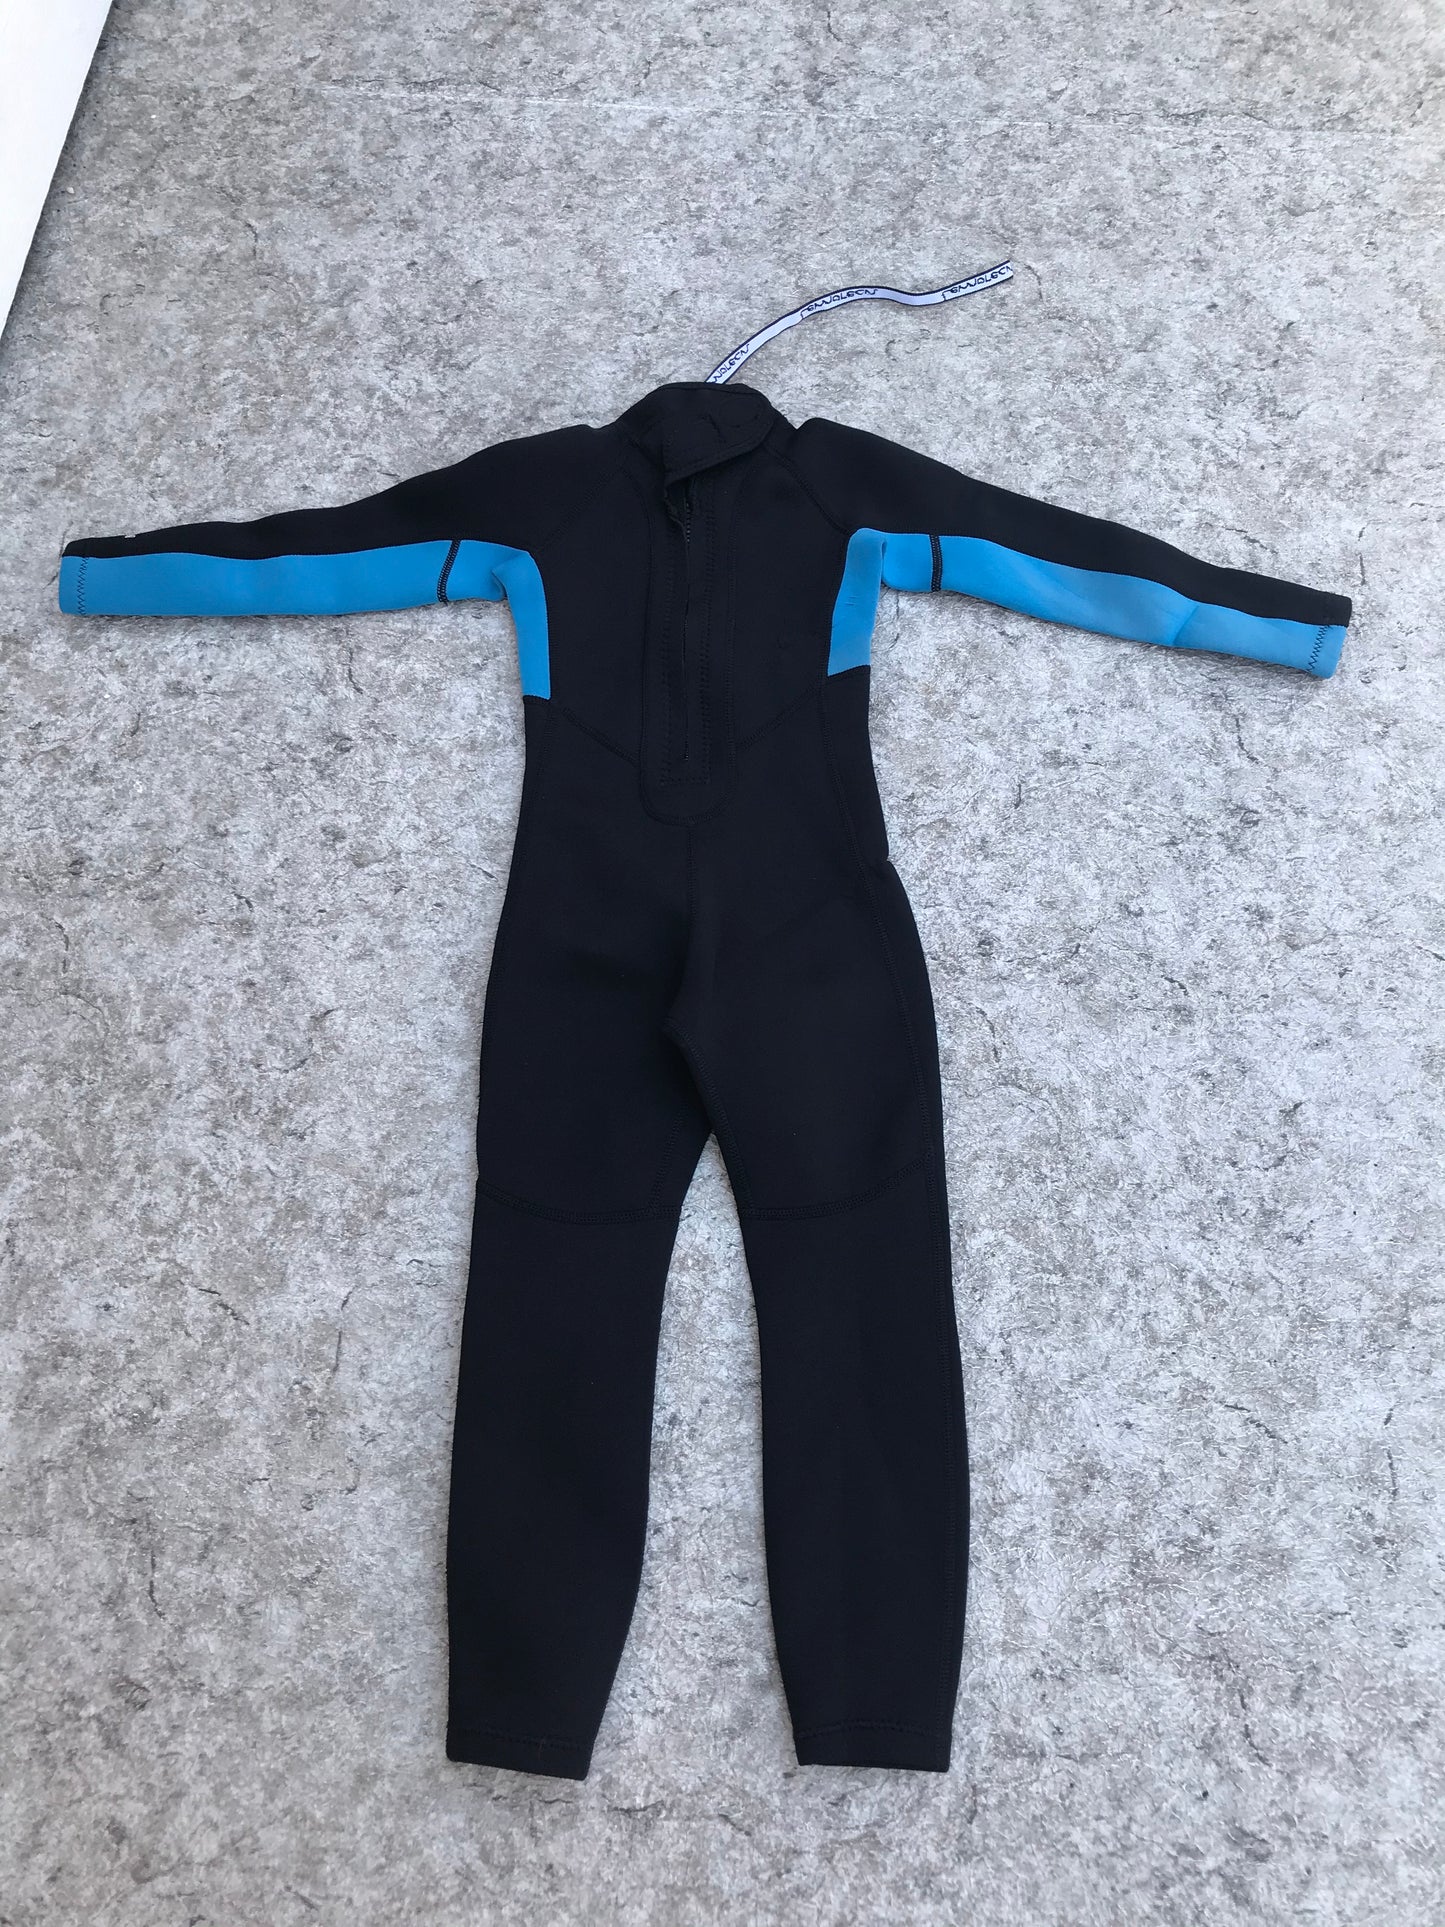 Wetsuit Child Size  4-6 Full 2-3 mm Neoprene Black Blue Excellent